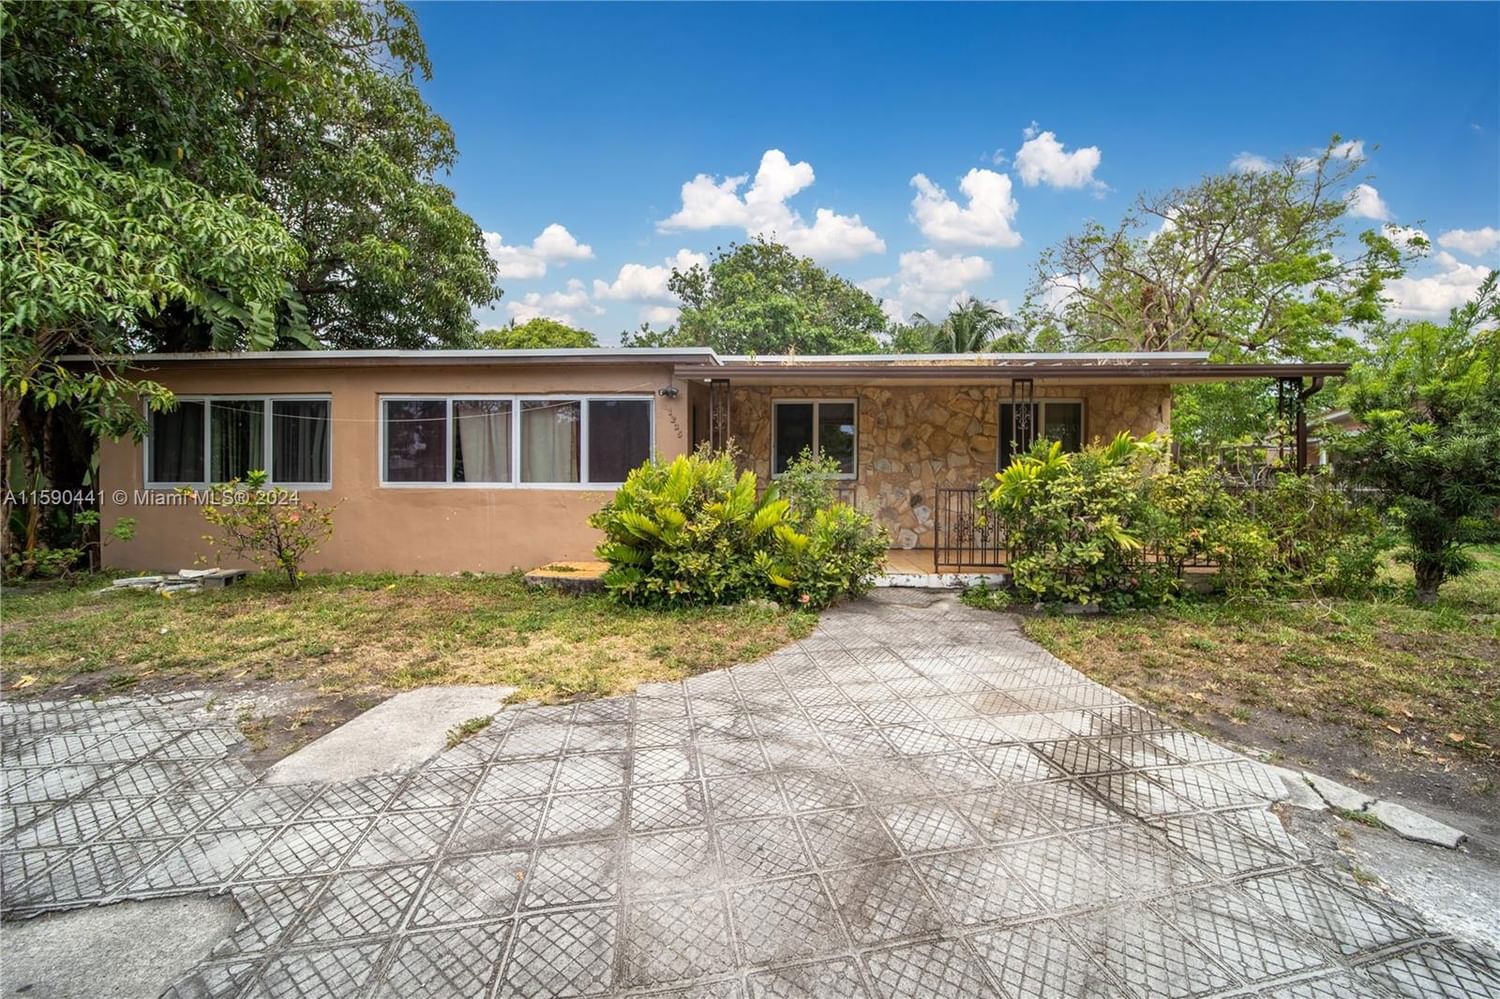 Real estate property located at 1235 Jann Ave, Miami-Dade County, PLAT NO 1 OPA LOCKA, Opa-Locka, FL